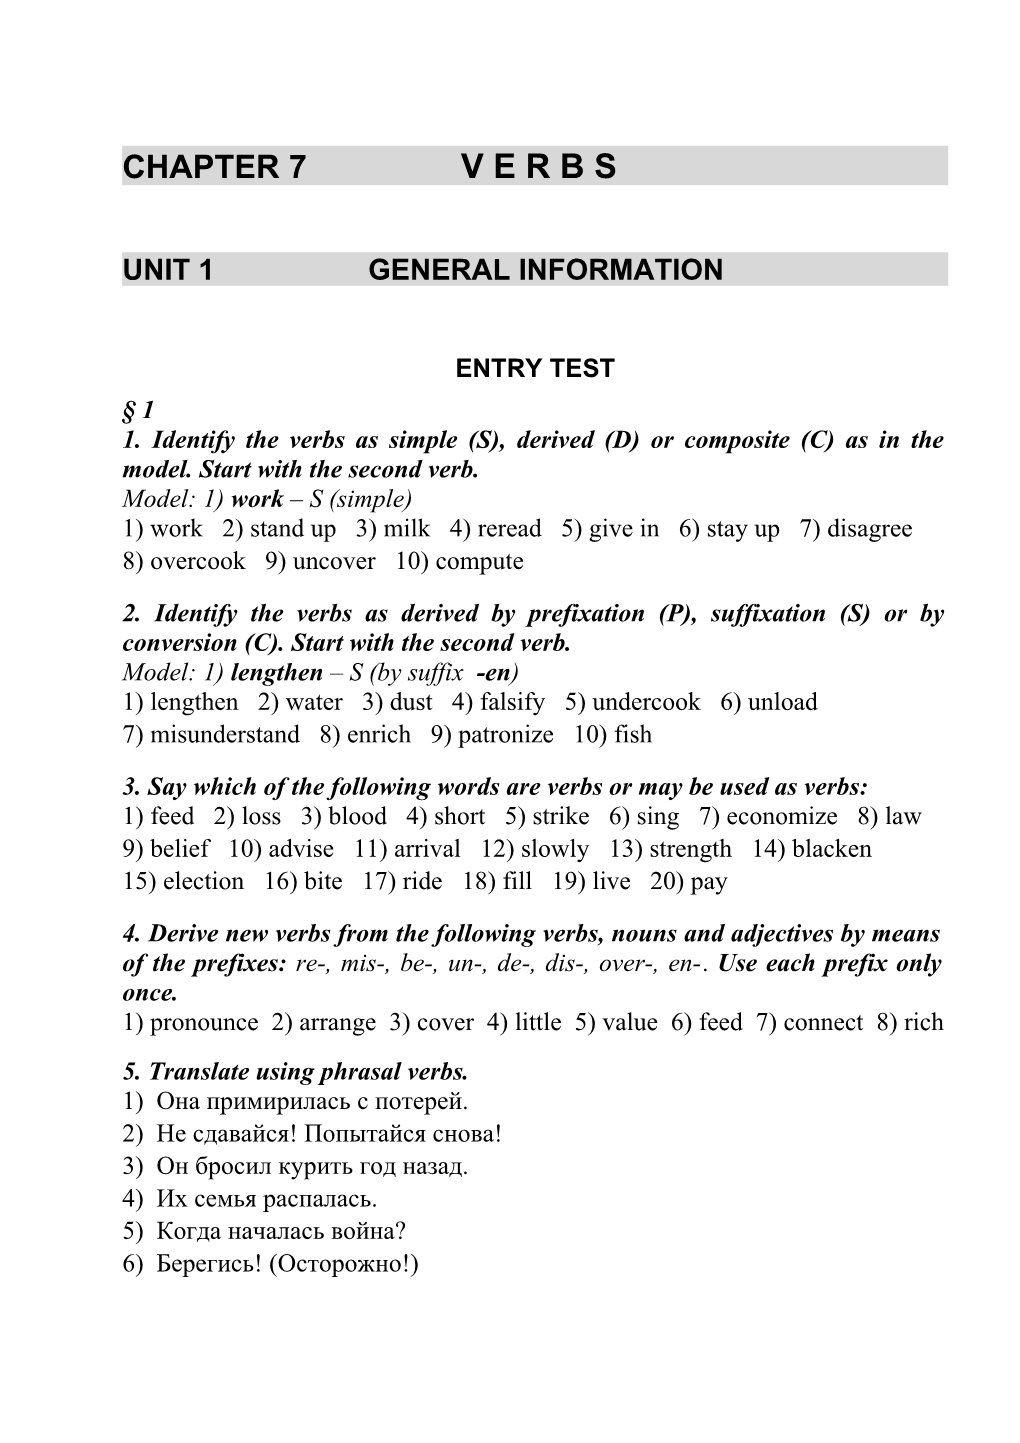 Unit 1 GENERAL INFORMATION